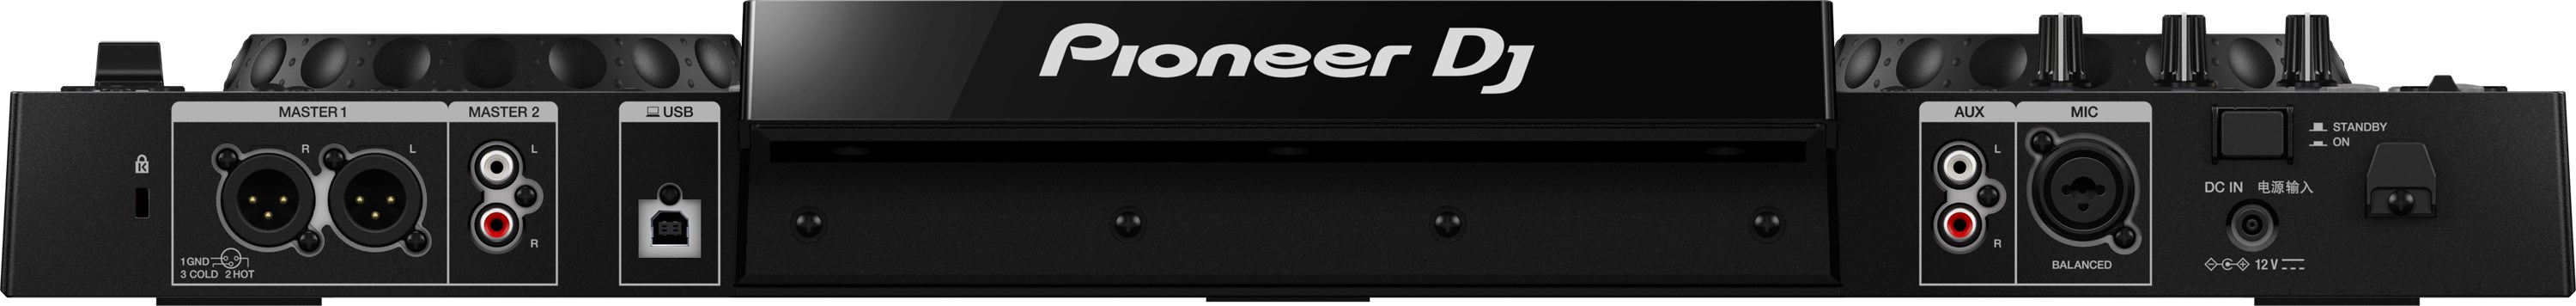 Pioneer Dj Xdj-rr - Standalone DJ Controller - Variation 2